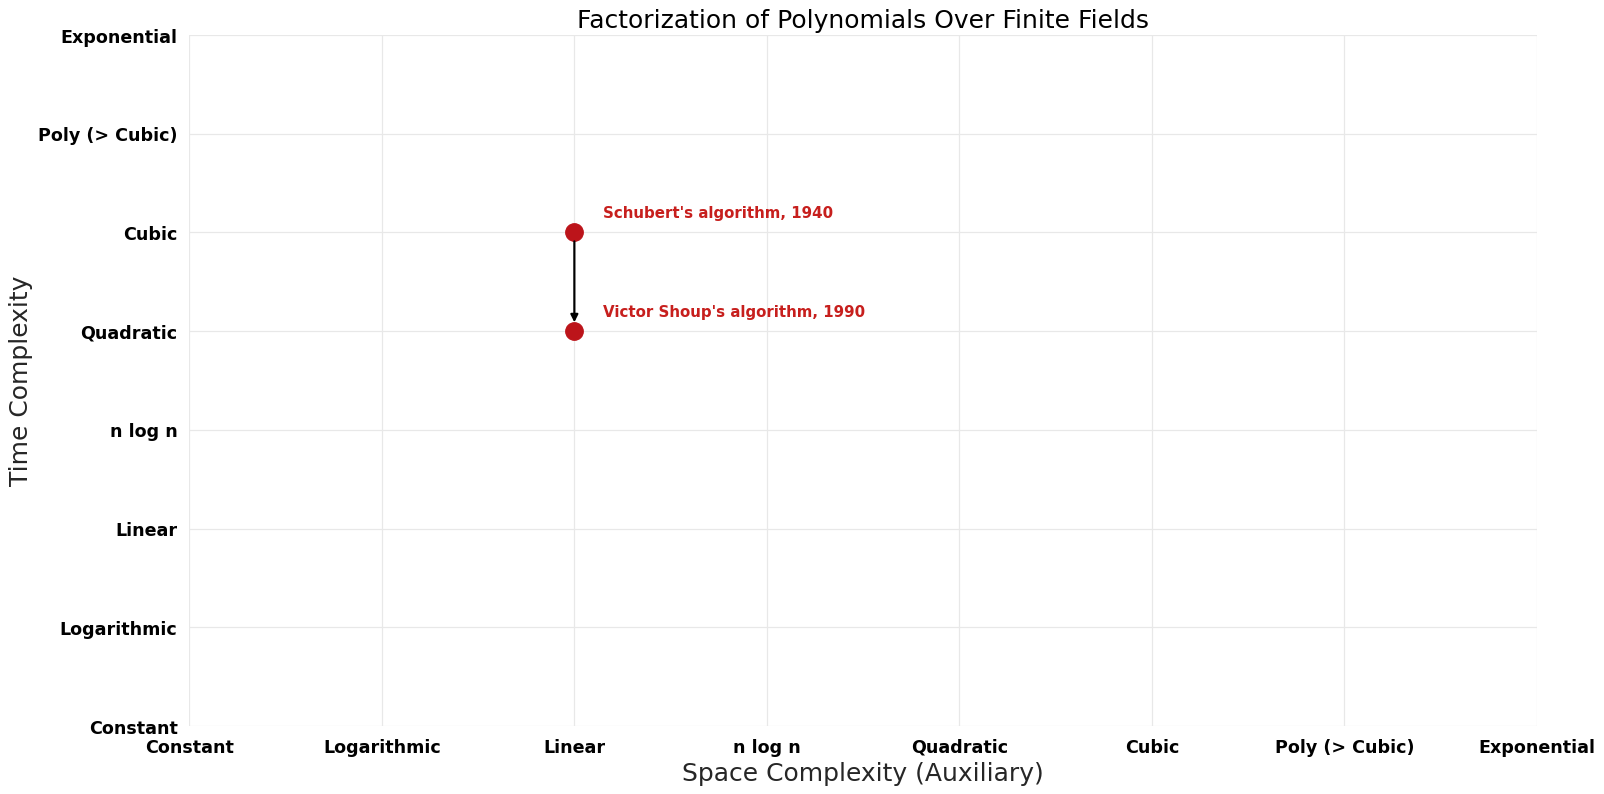 File:Factorization of Polynomials Over Finite Fields - Pareto Frontier.png